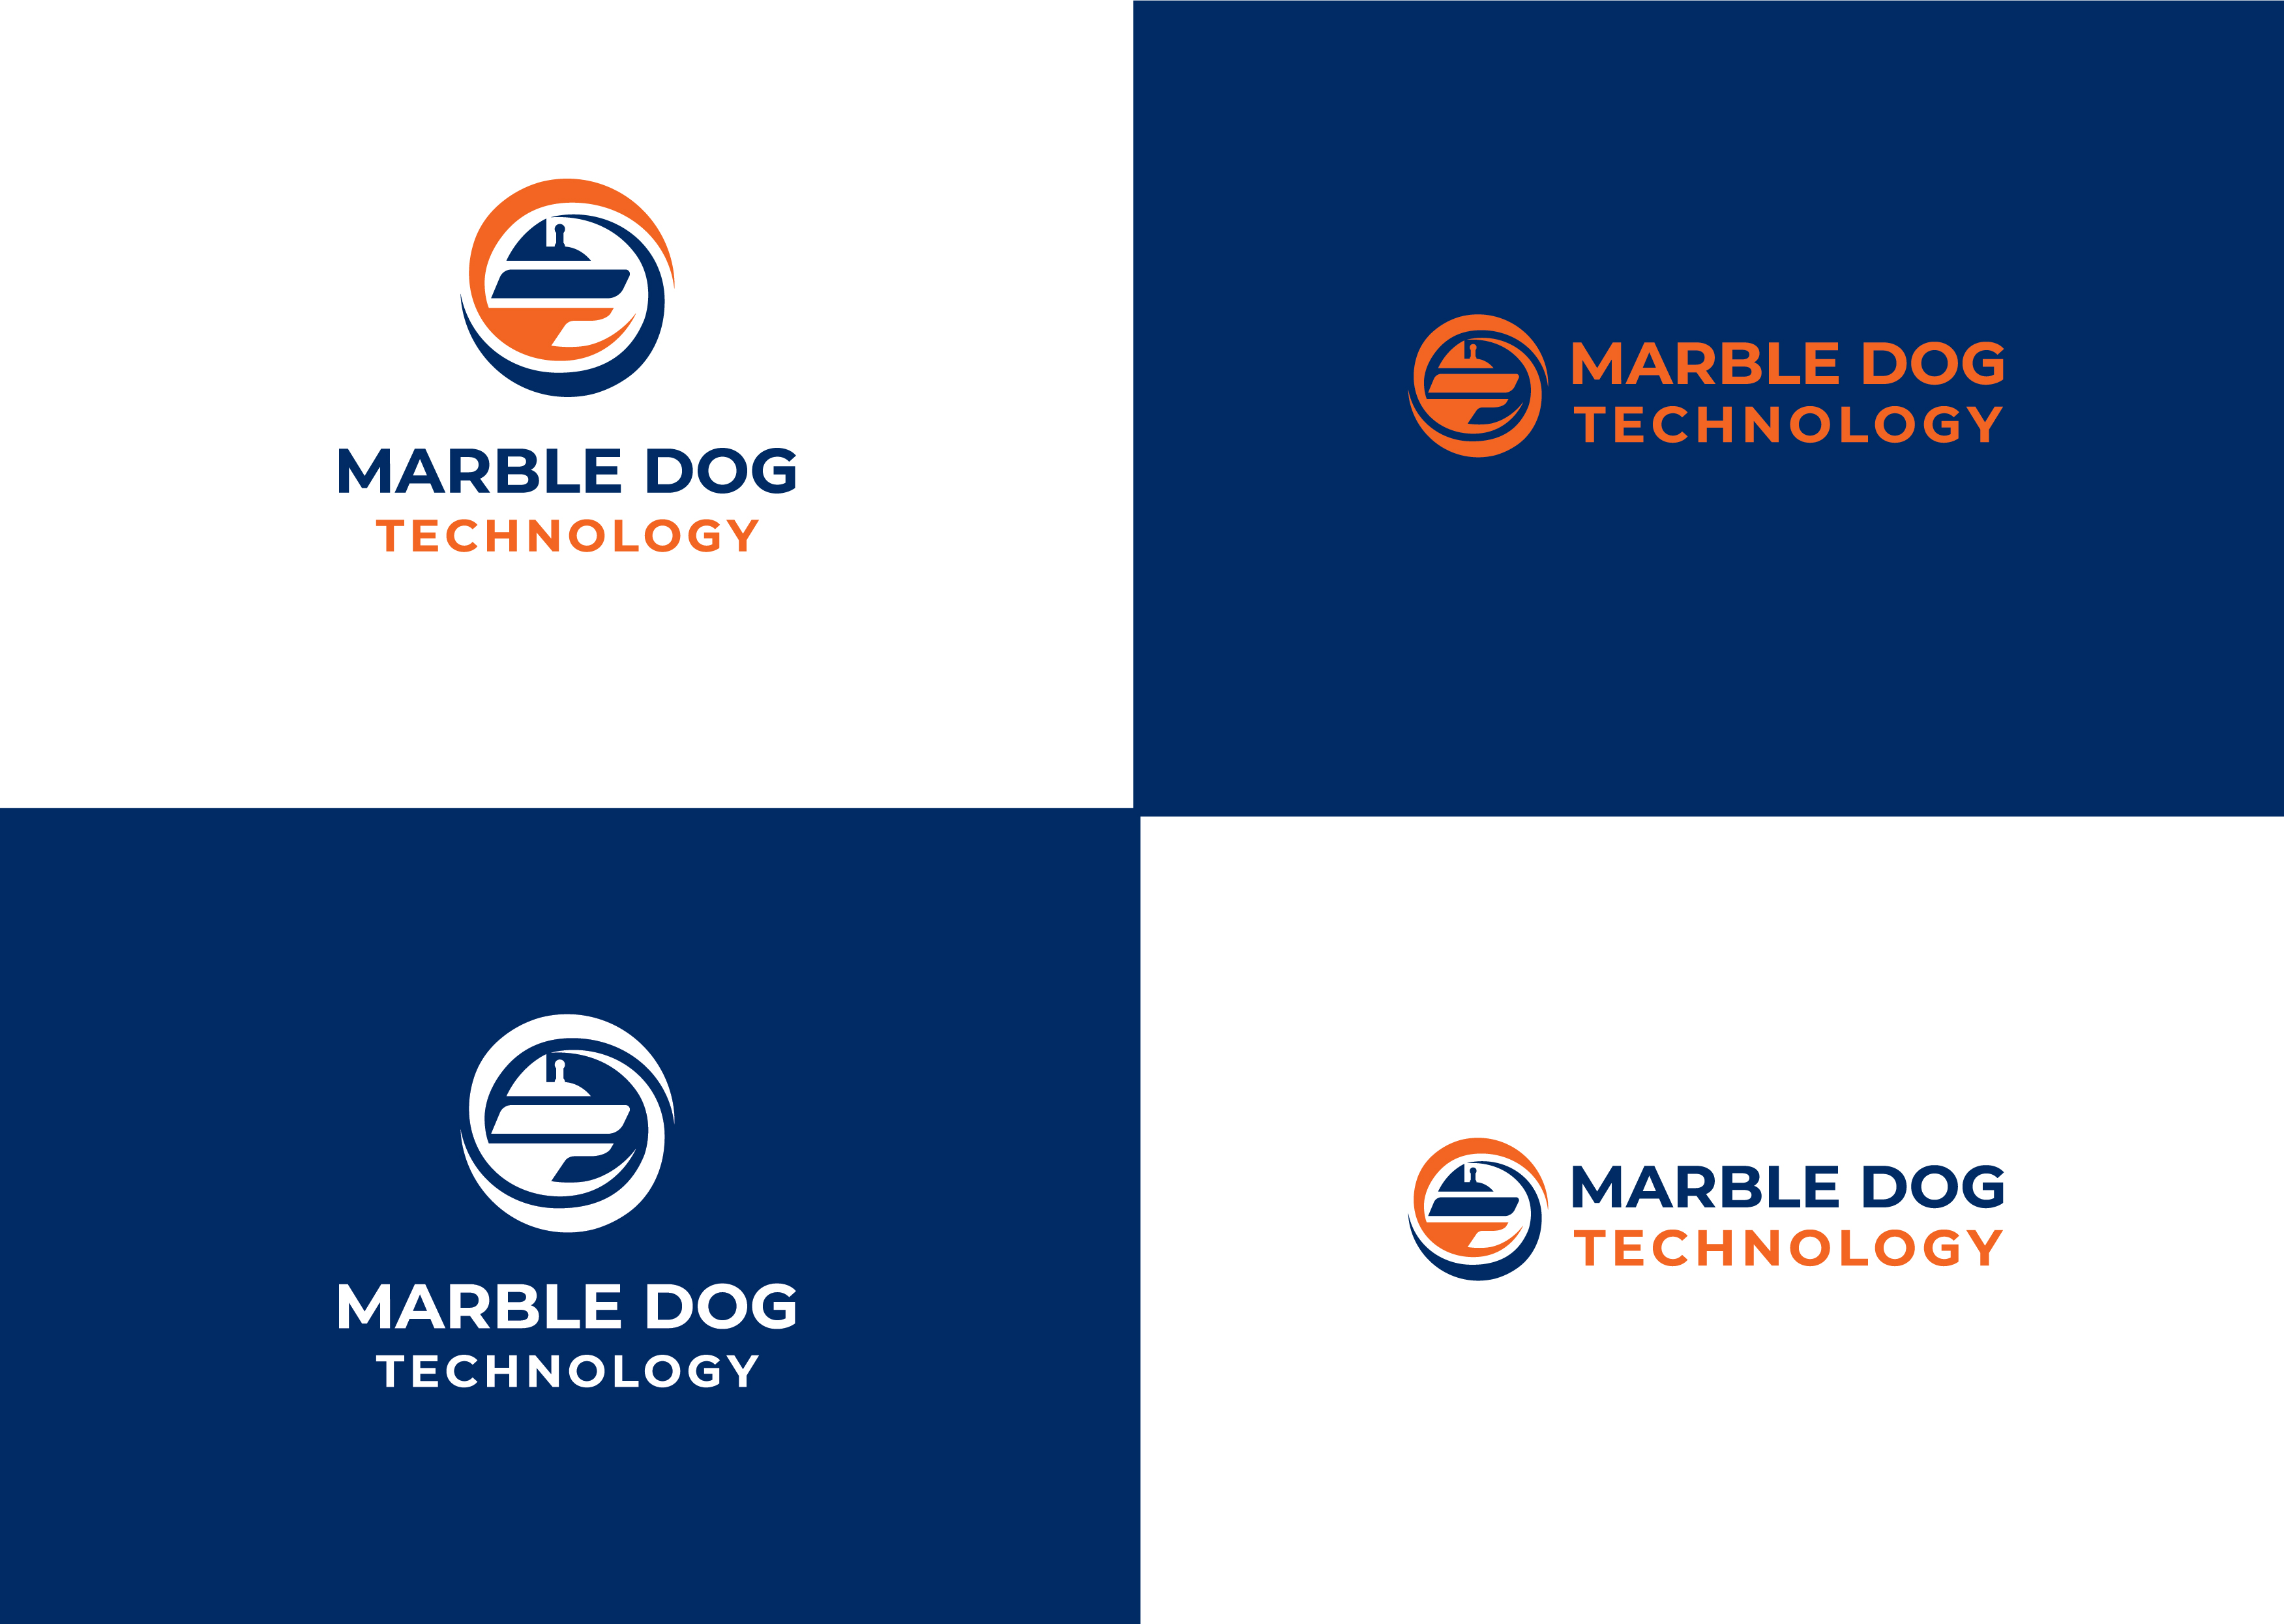 Marble Dog Technology_1.jpg